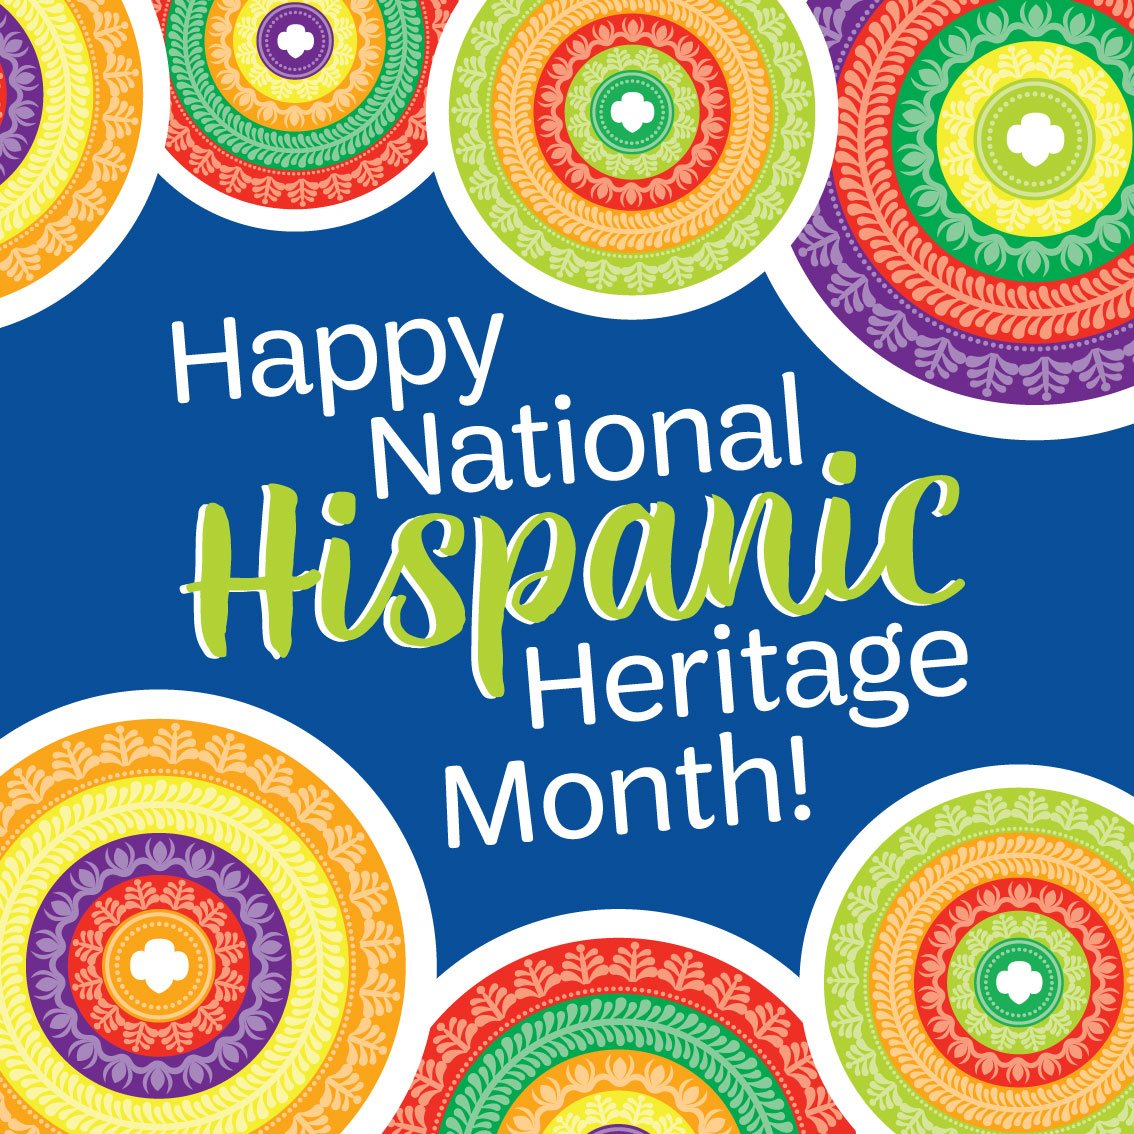 Happy Hispanic Heritage Month! Join us in celebrating our Hispanic